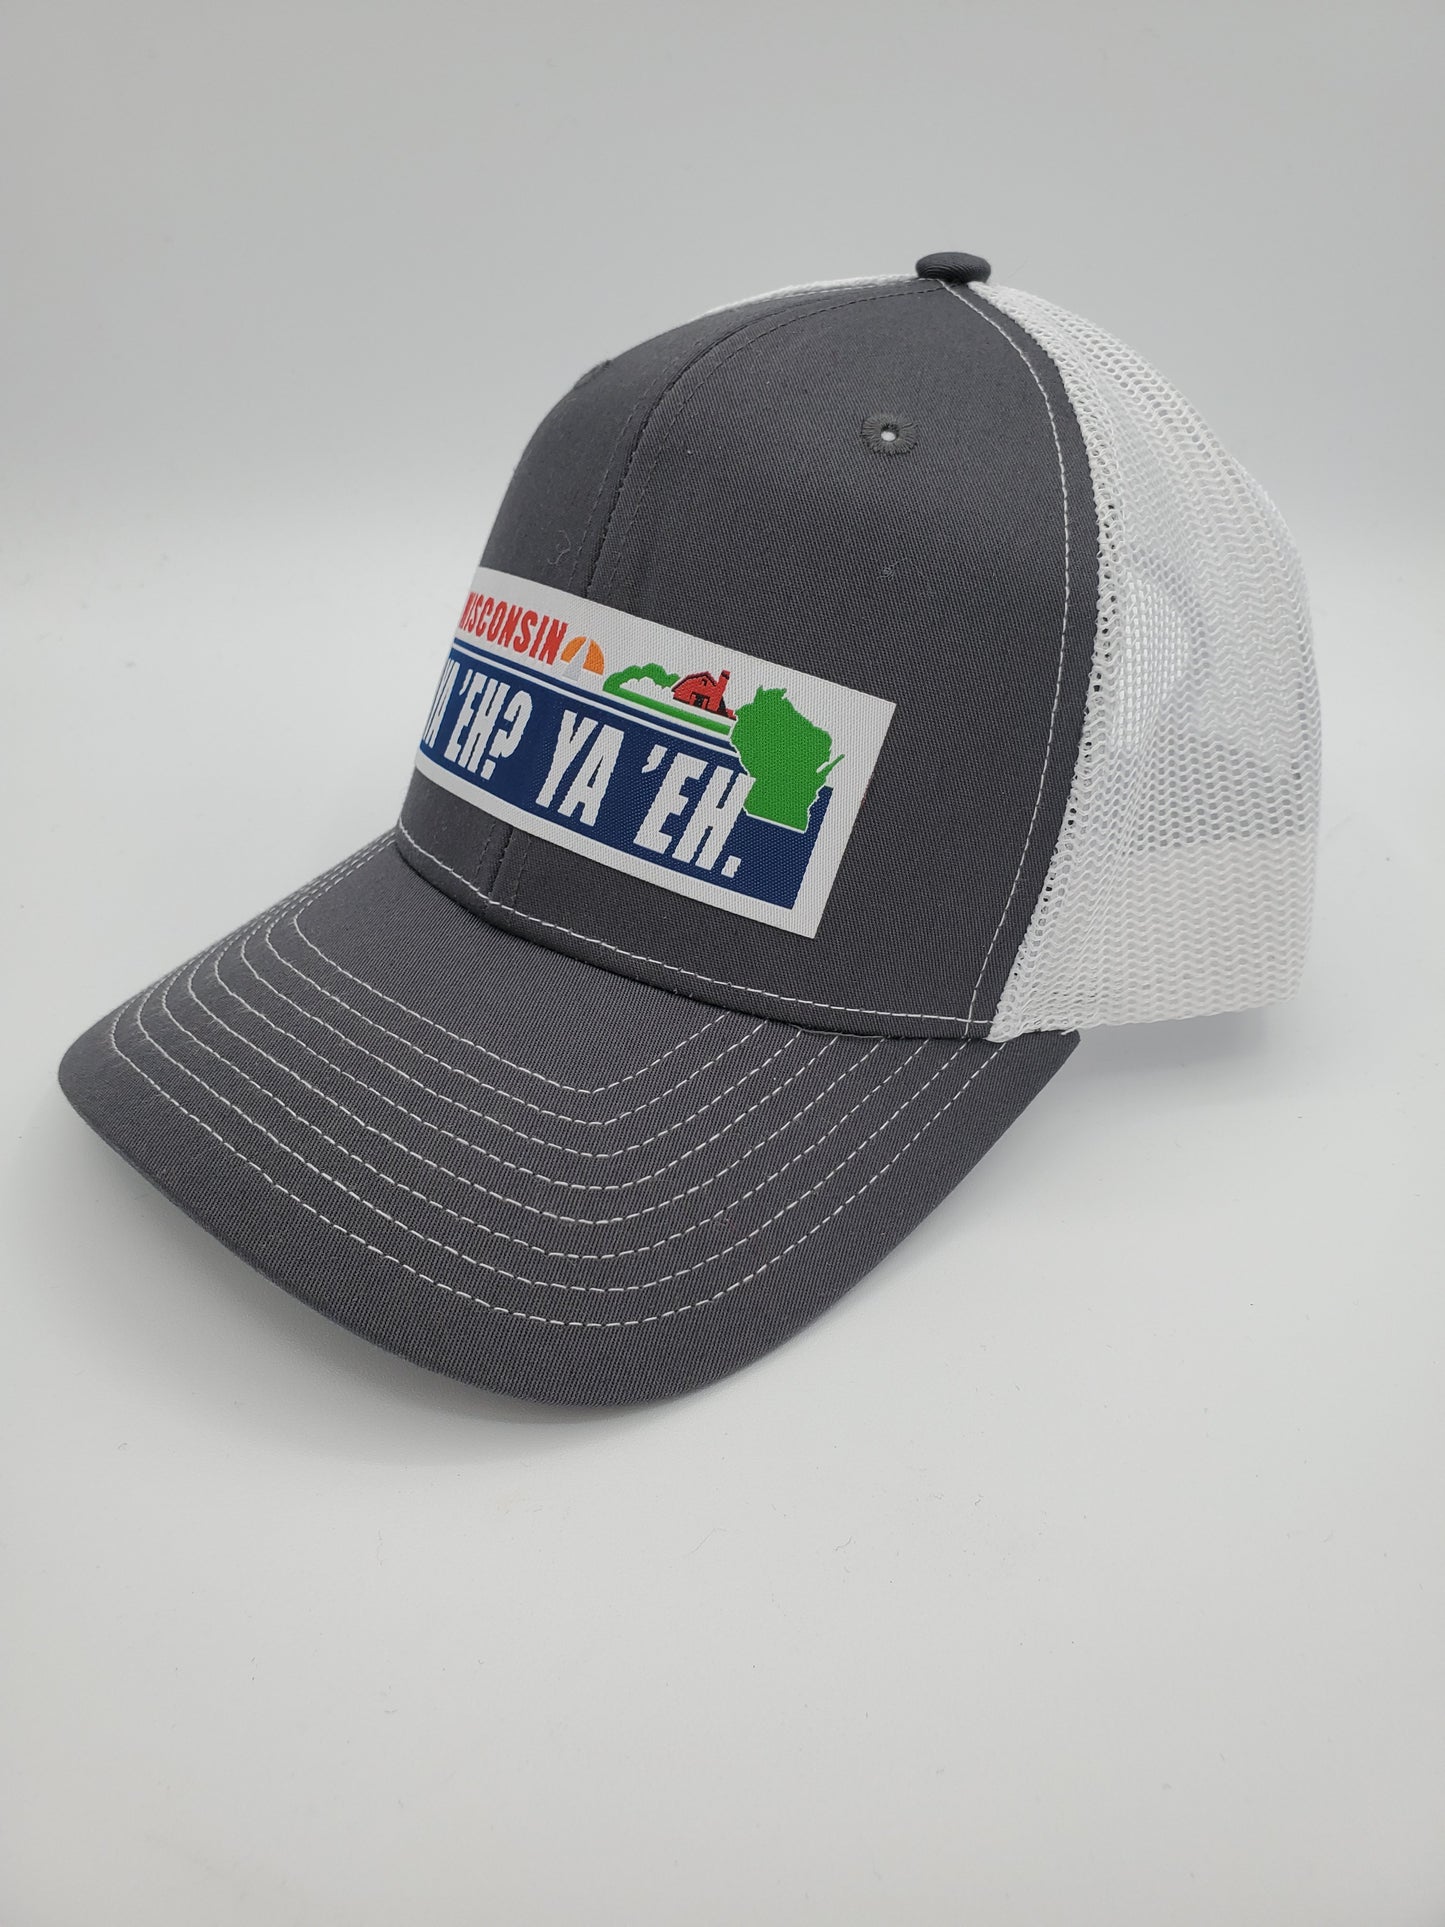 "Ya 'Eh? Ya 'Eh." Wisconsin Plate Design Trucker Hat (White Mesh/ Charcoal Fabric)